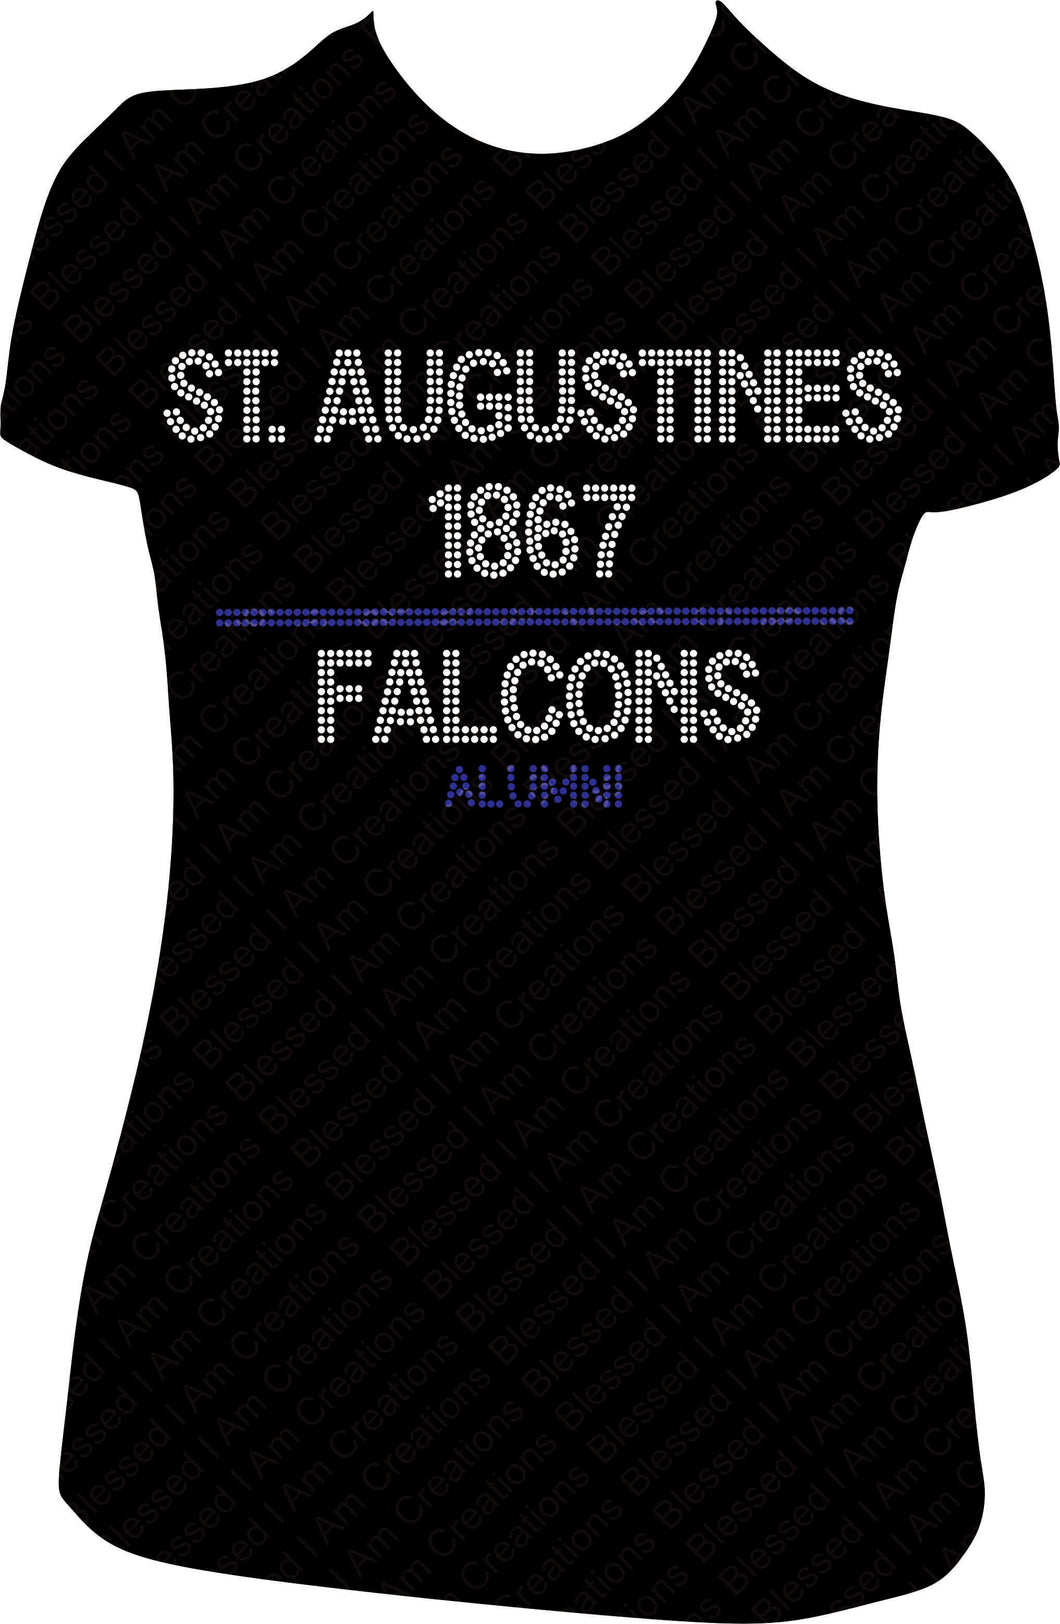 St Augustine Falcons Rhinestone Shirt